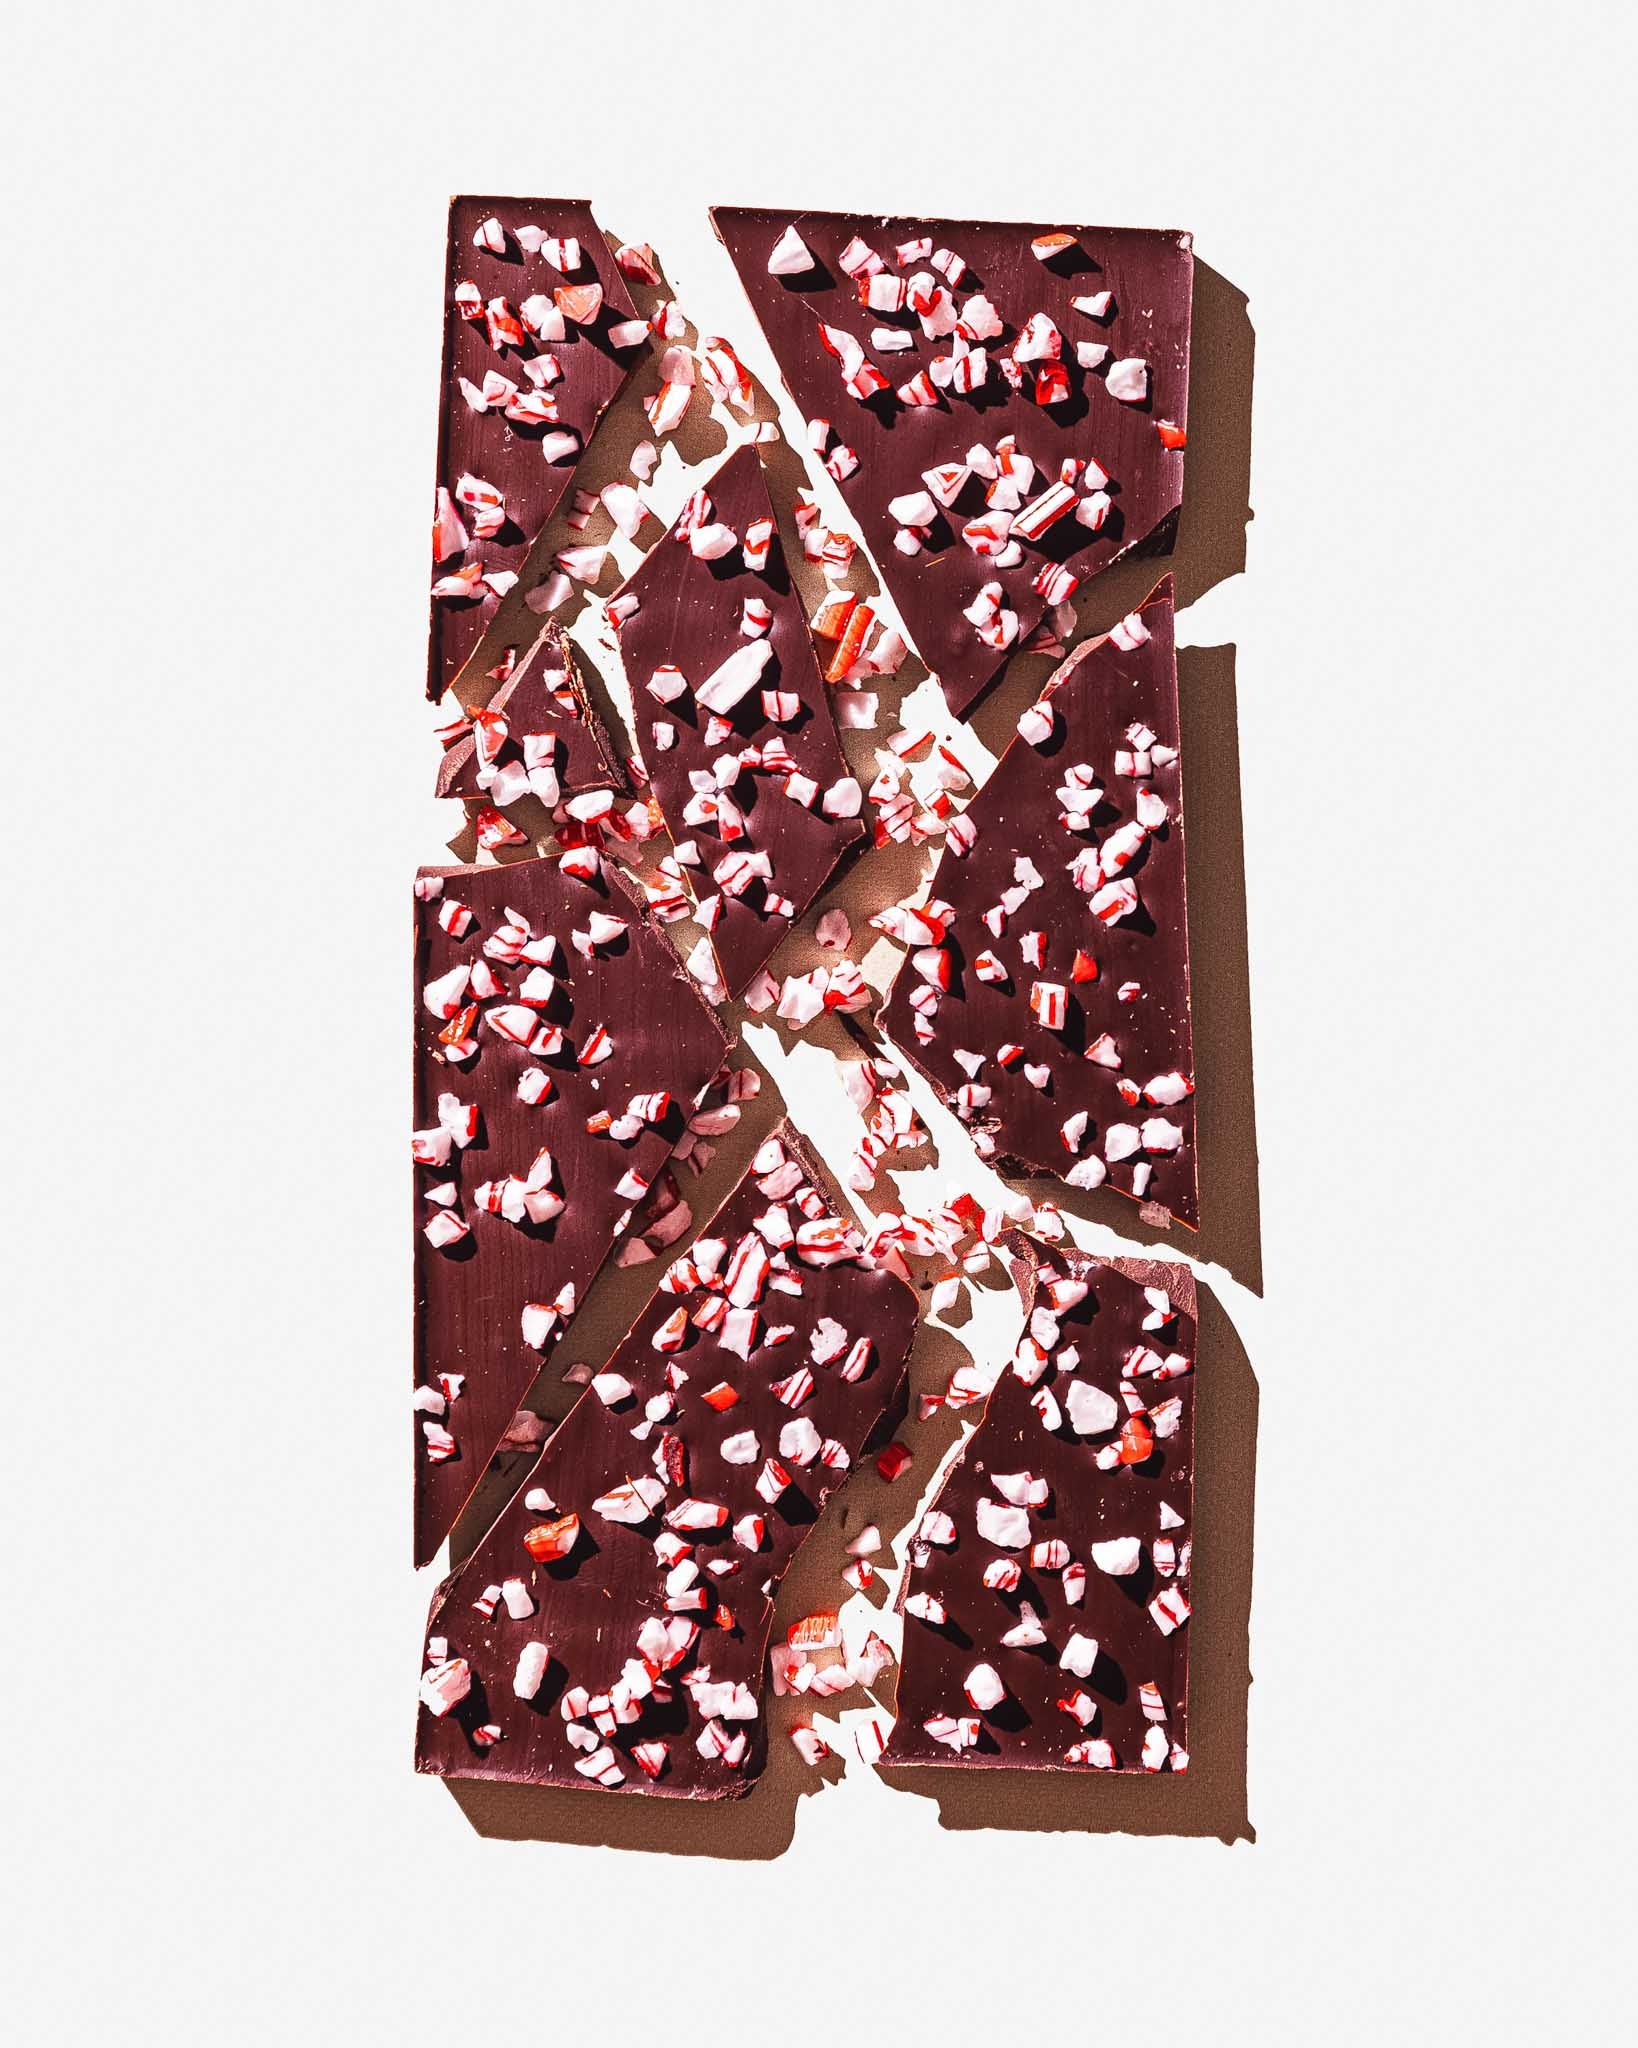 Gourmet Peppermint Bark Luxury Dark Chocolate Bar Gift Box Compartes